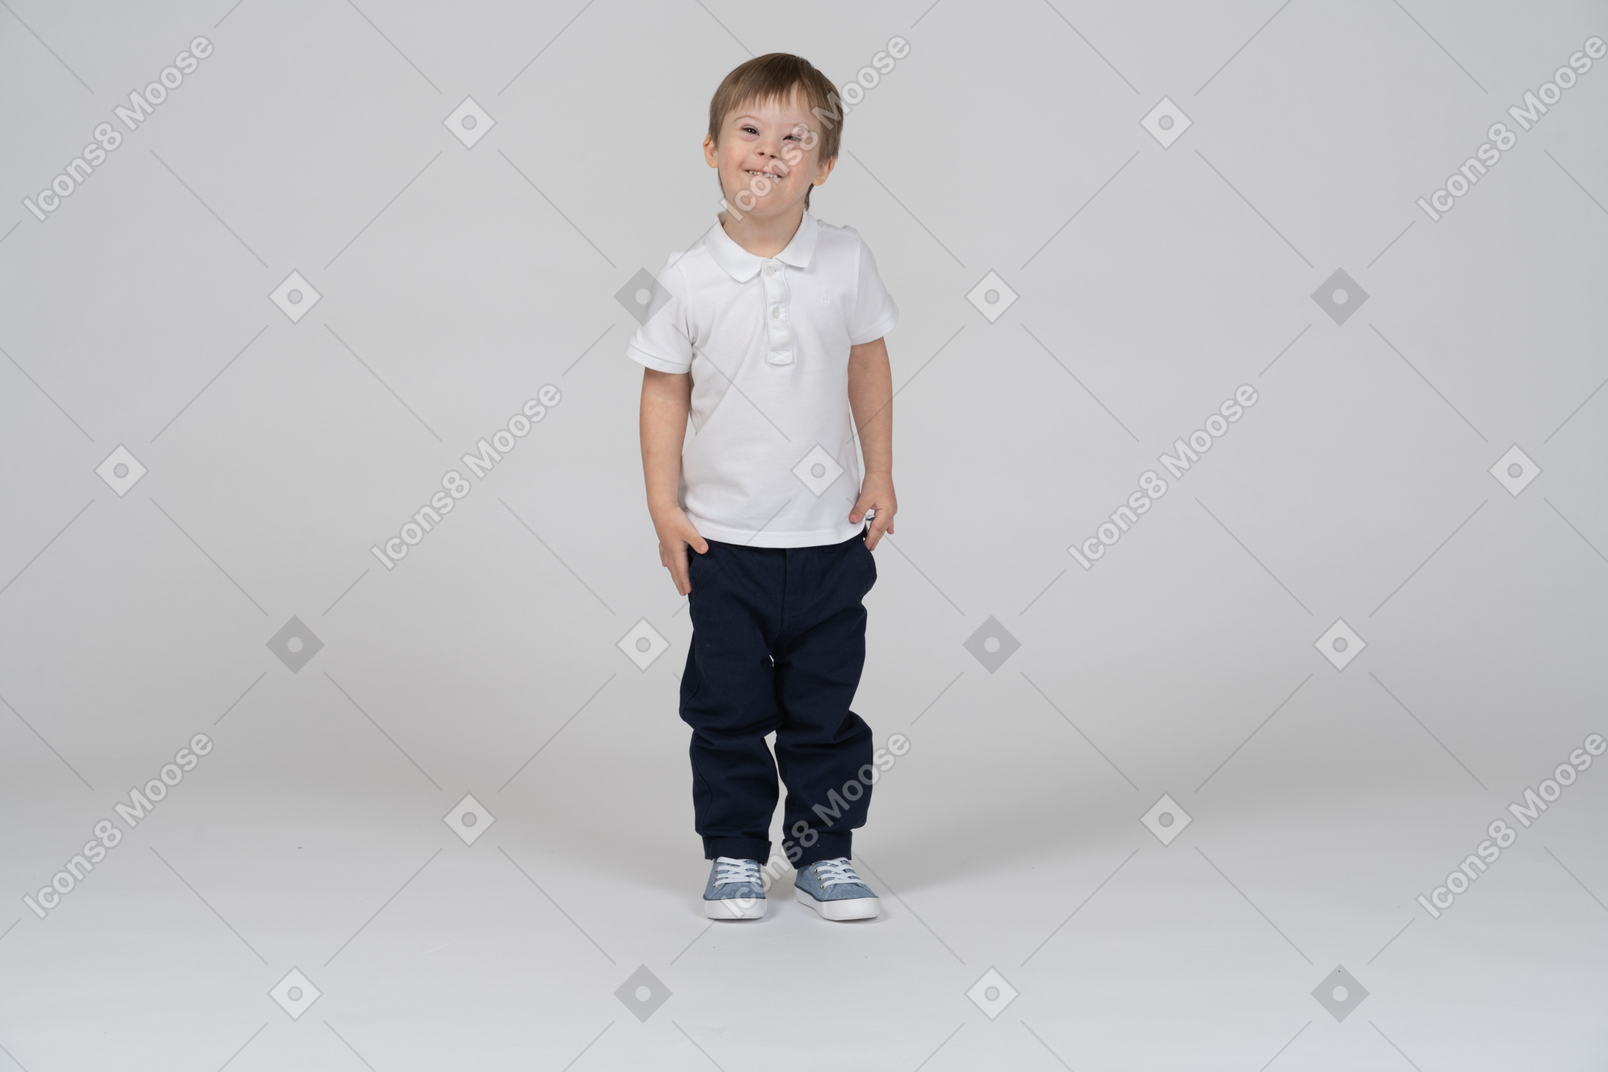 Front view of joyful little boy standing upright